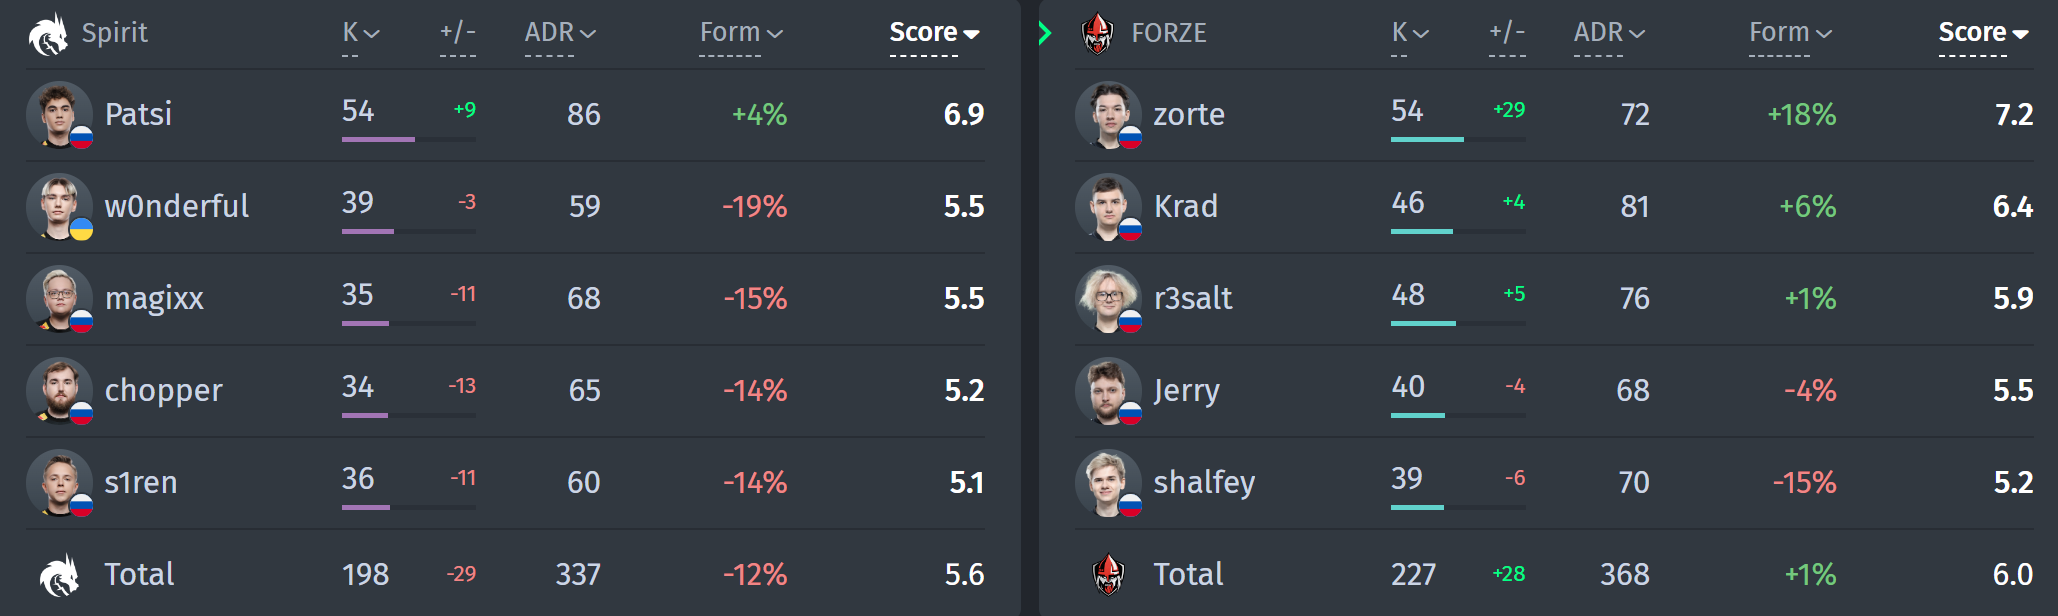 Player Statistics in the Team Spirit - FORZE match